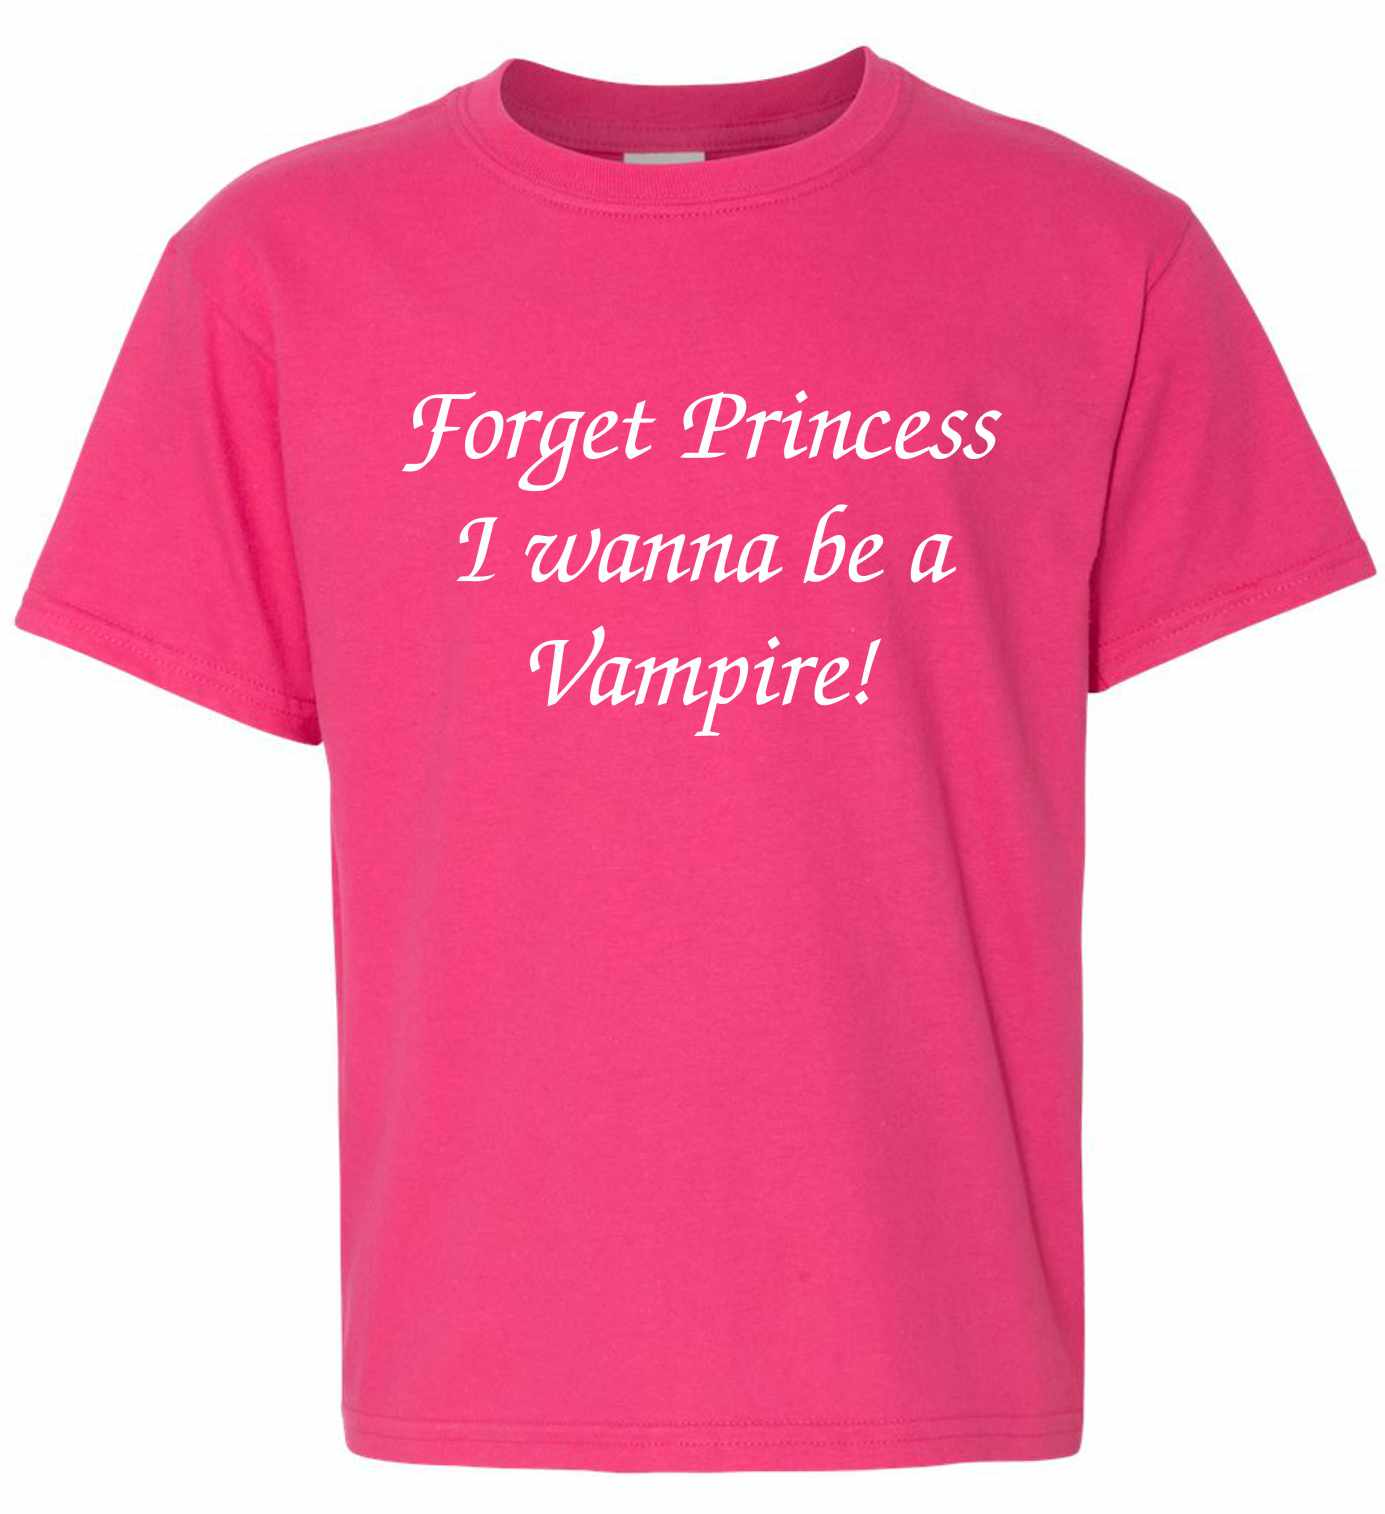 FORGET PRINCESS I WANNA BE VAMPIRE on Kids T-Shirt